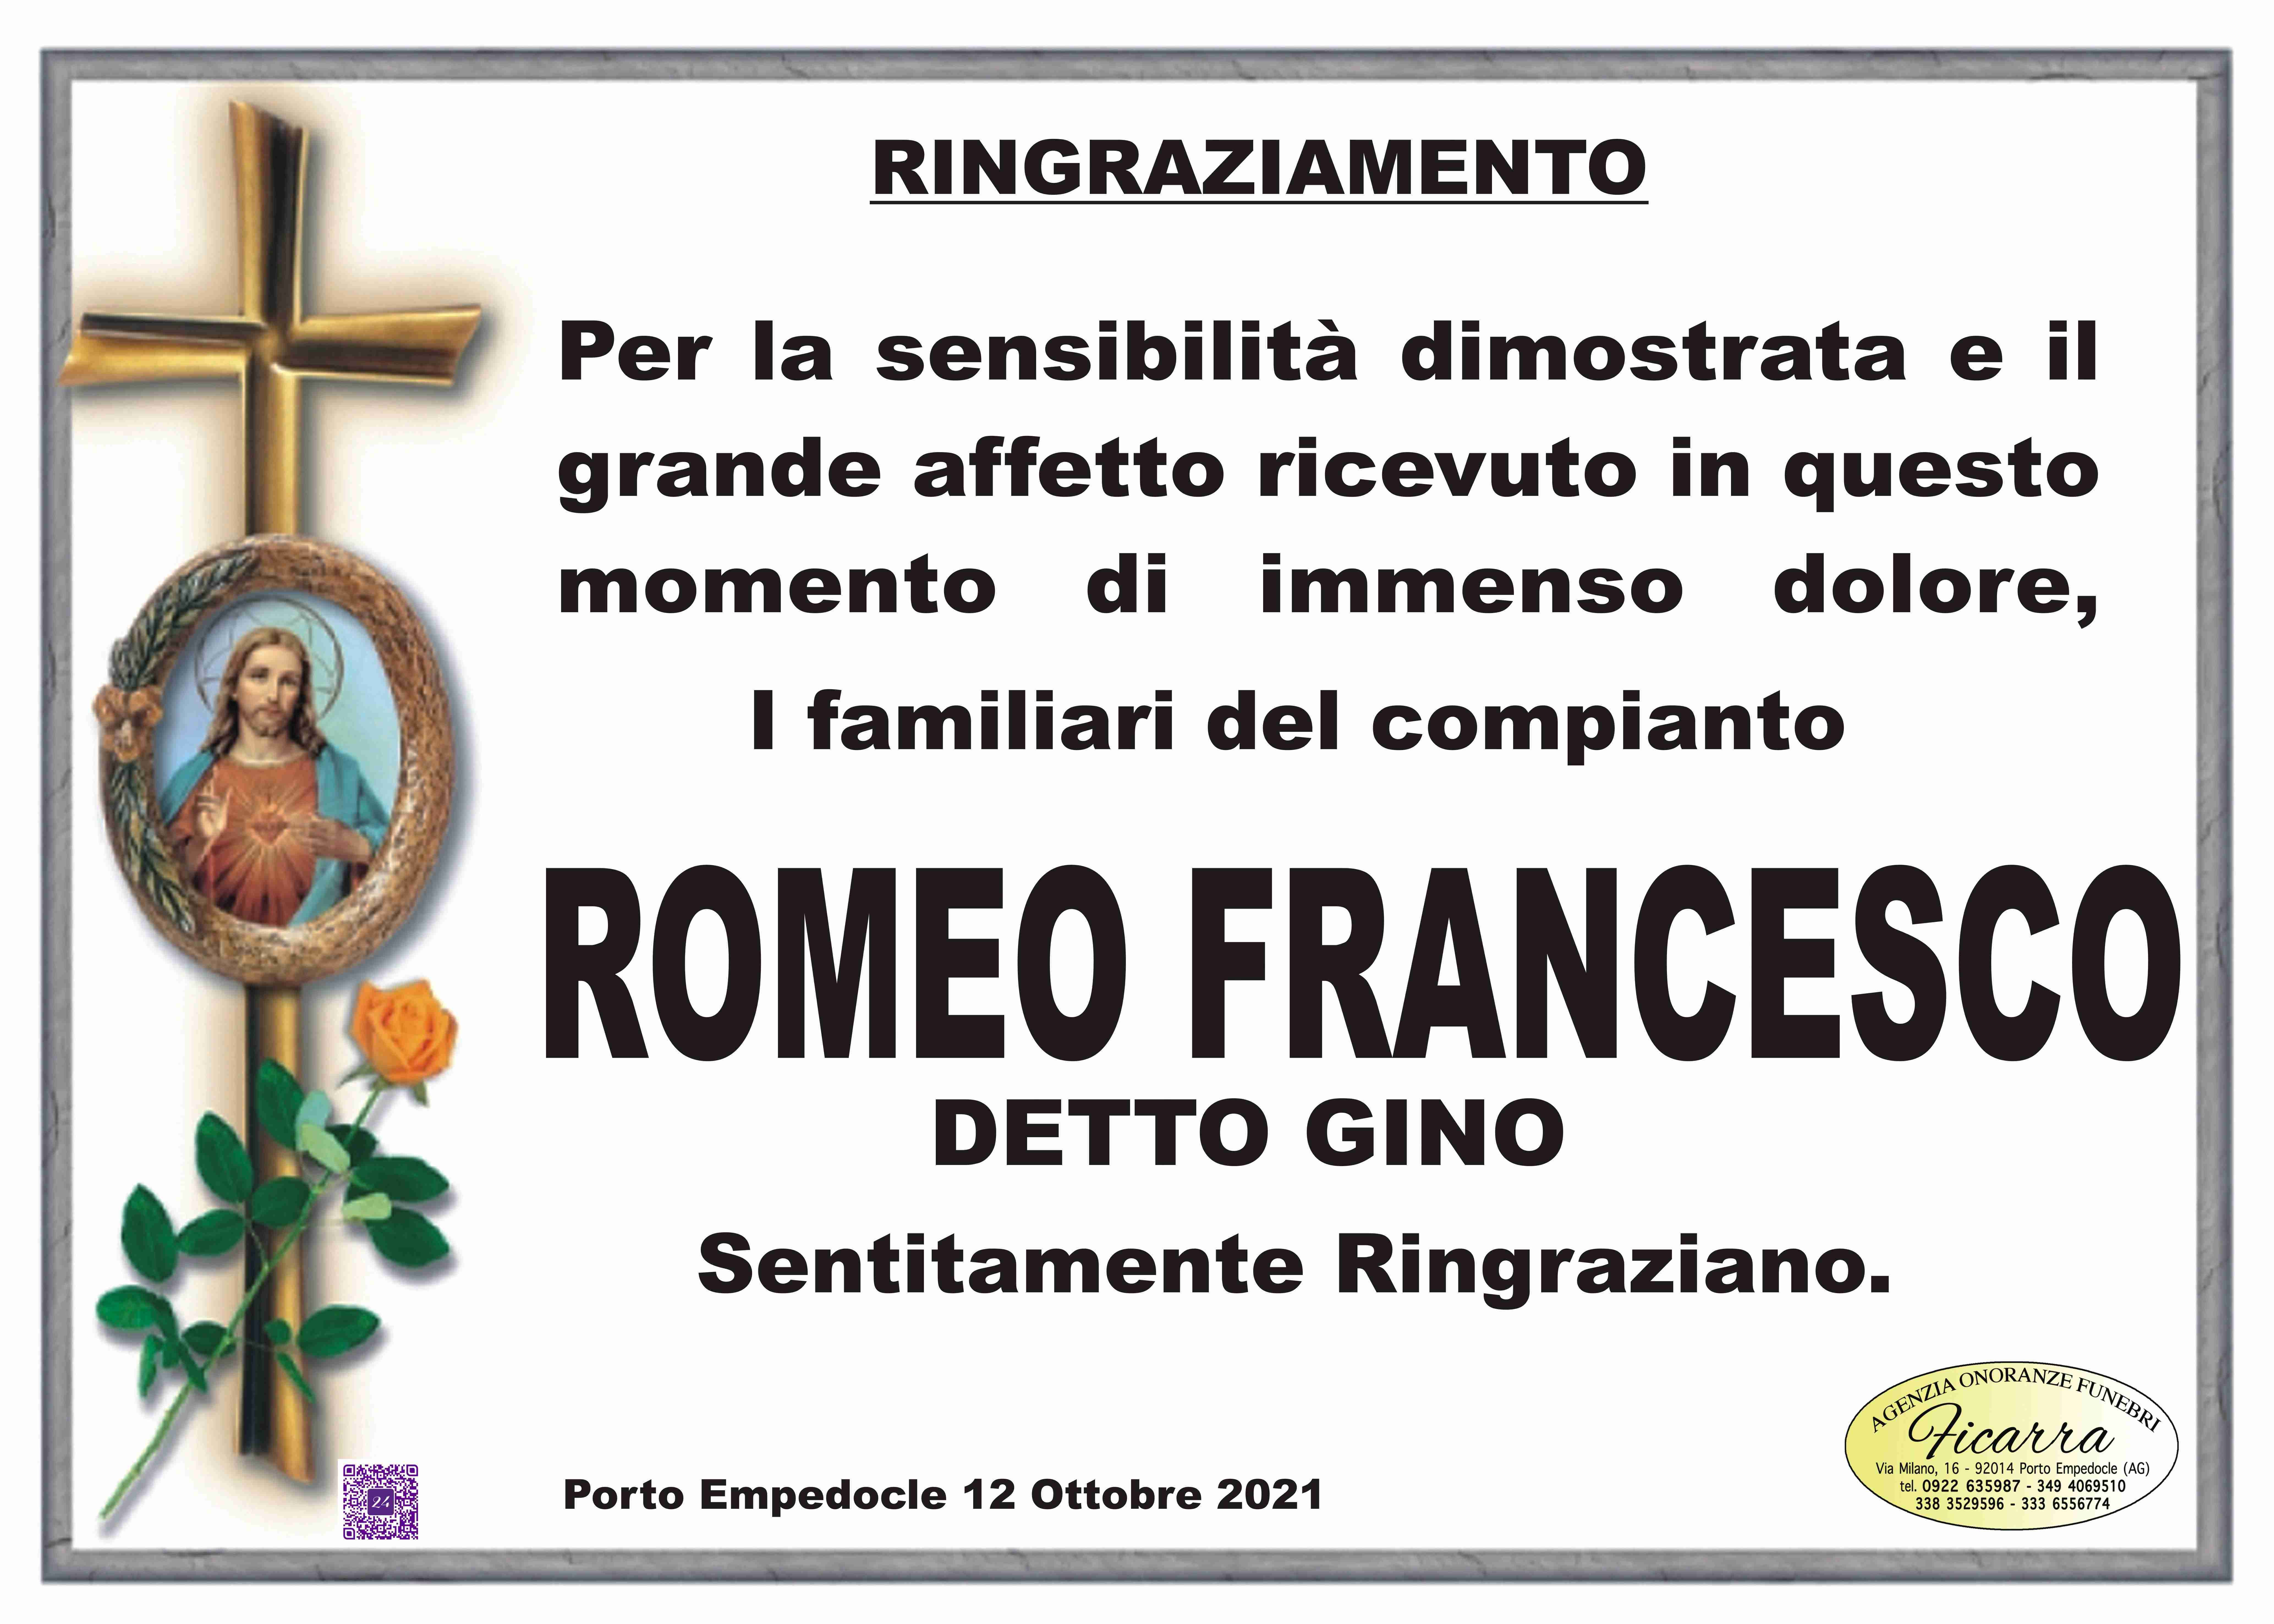 Francesco Romeo